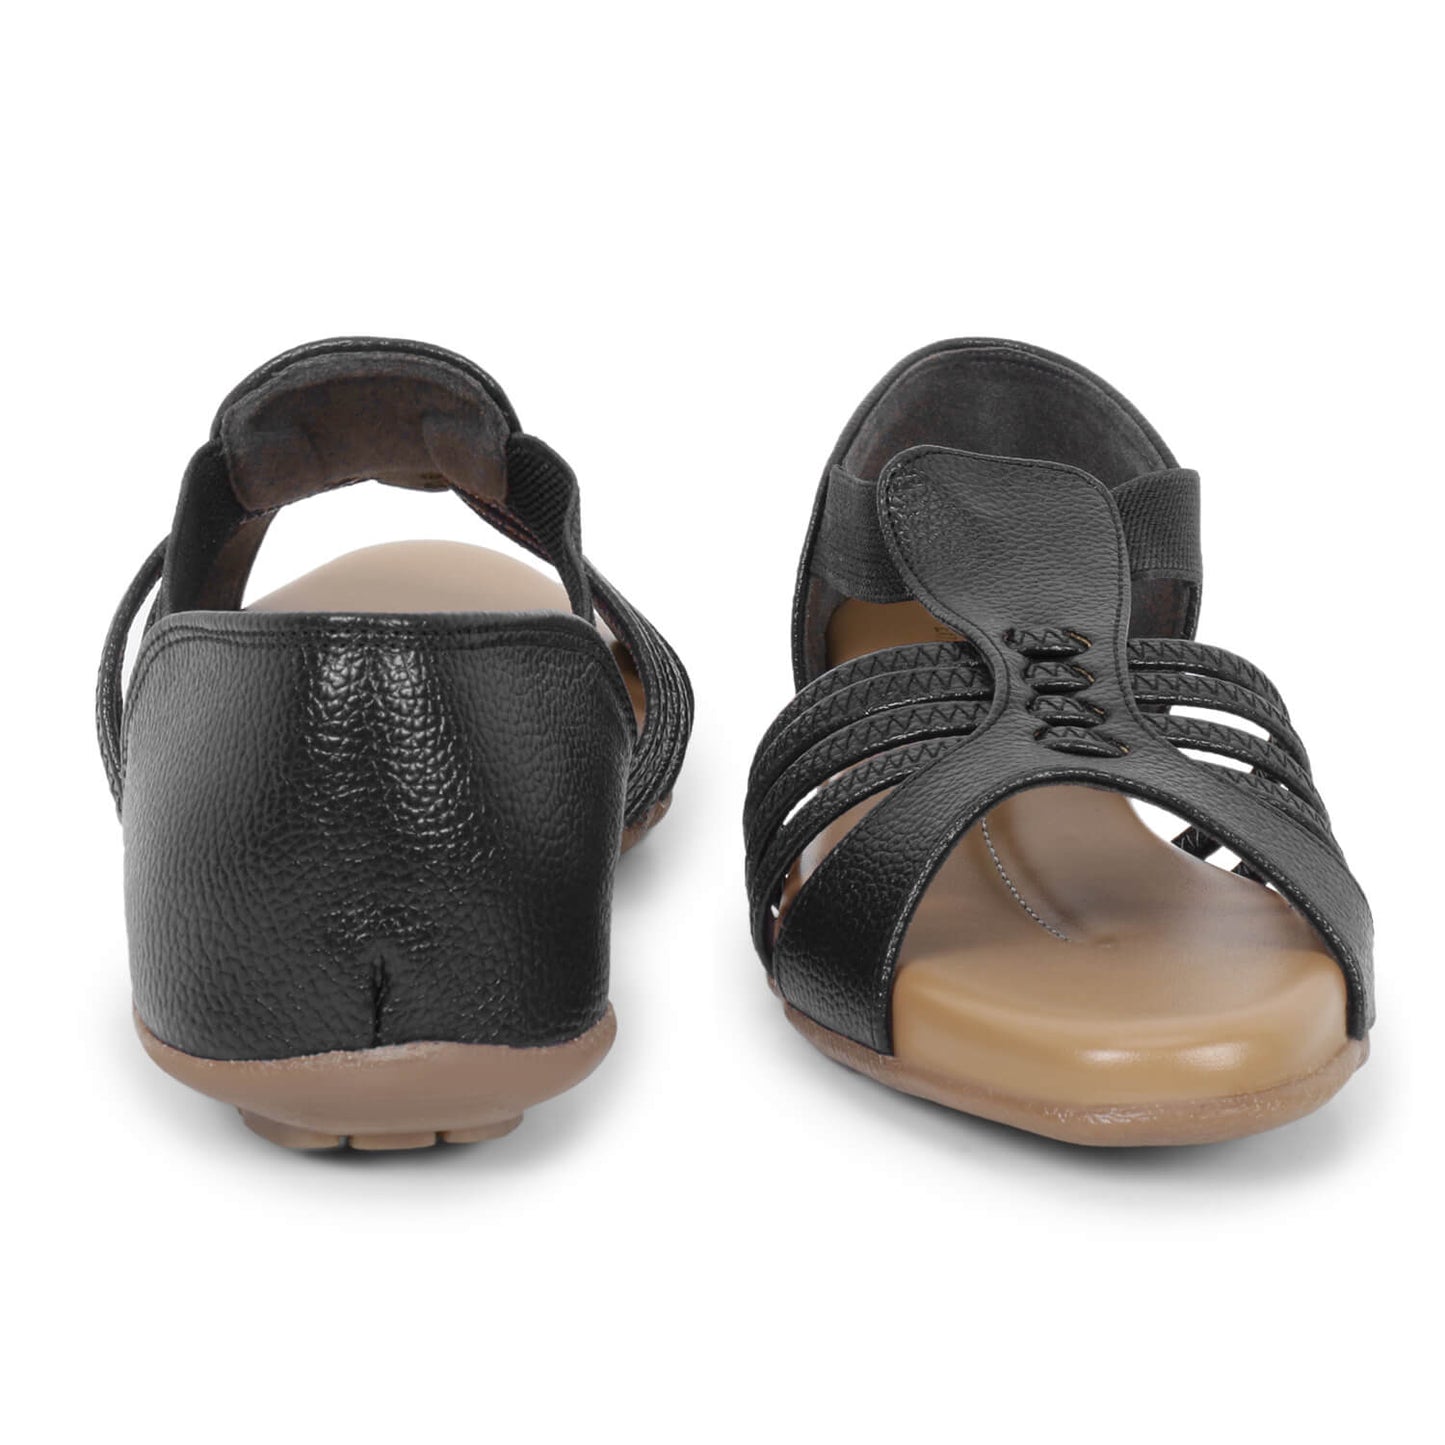 DOCTOR EXTRA SOFT Women's Sandals ART-535 Orthopaedic & Diabetic, Lightweight & Durable